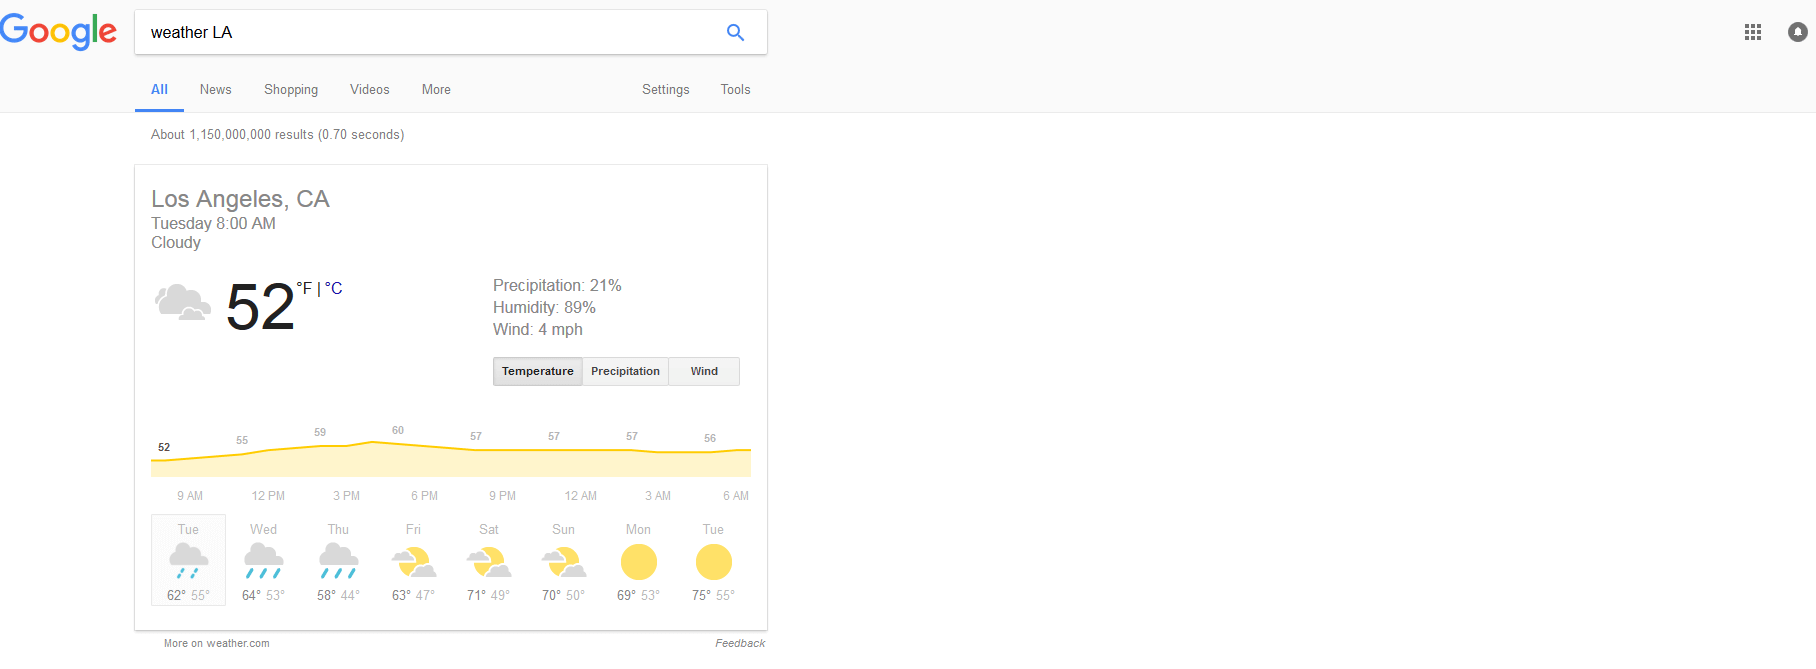 Google’s weather service for LA